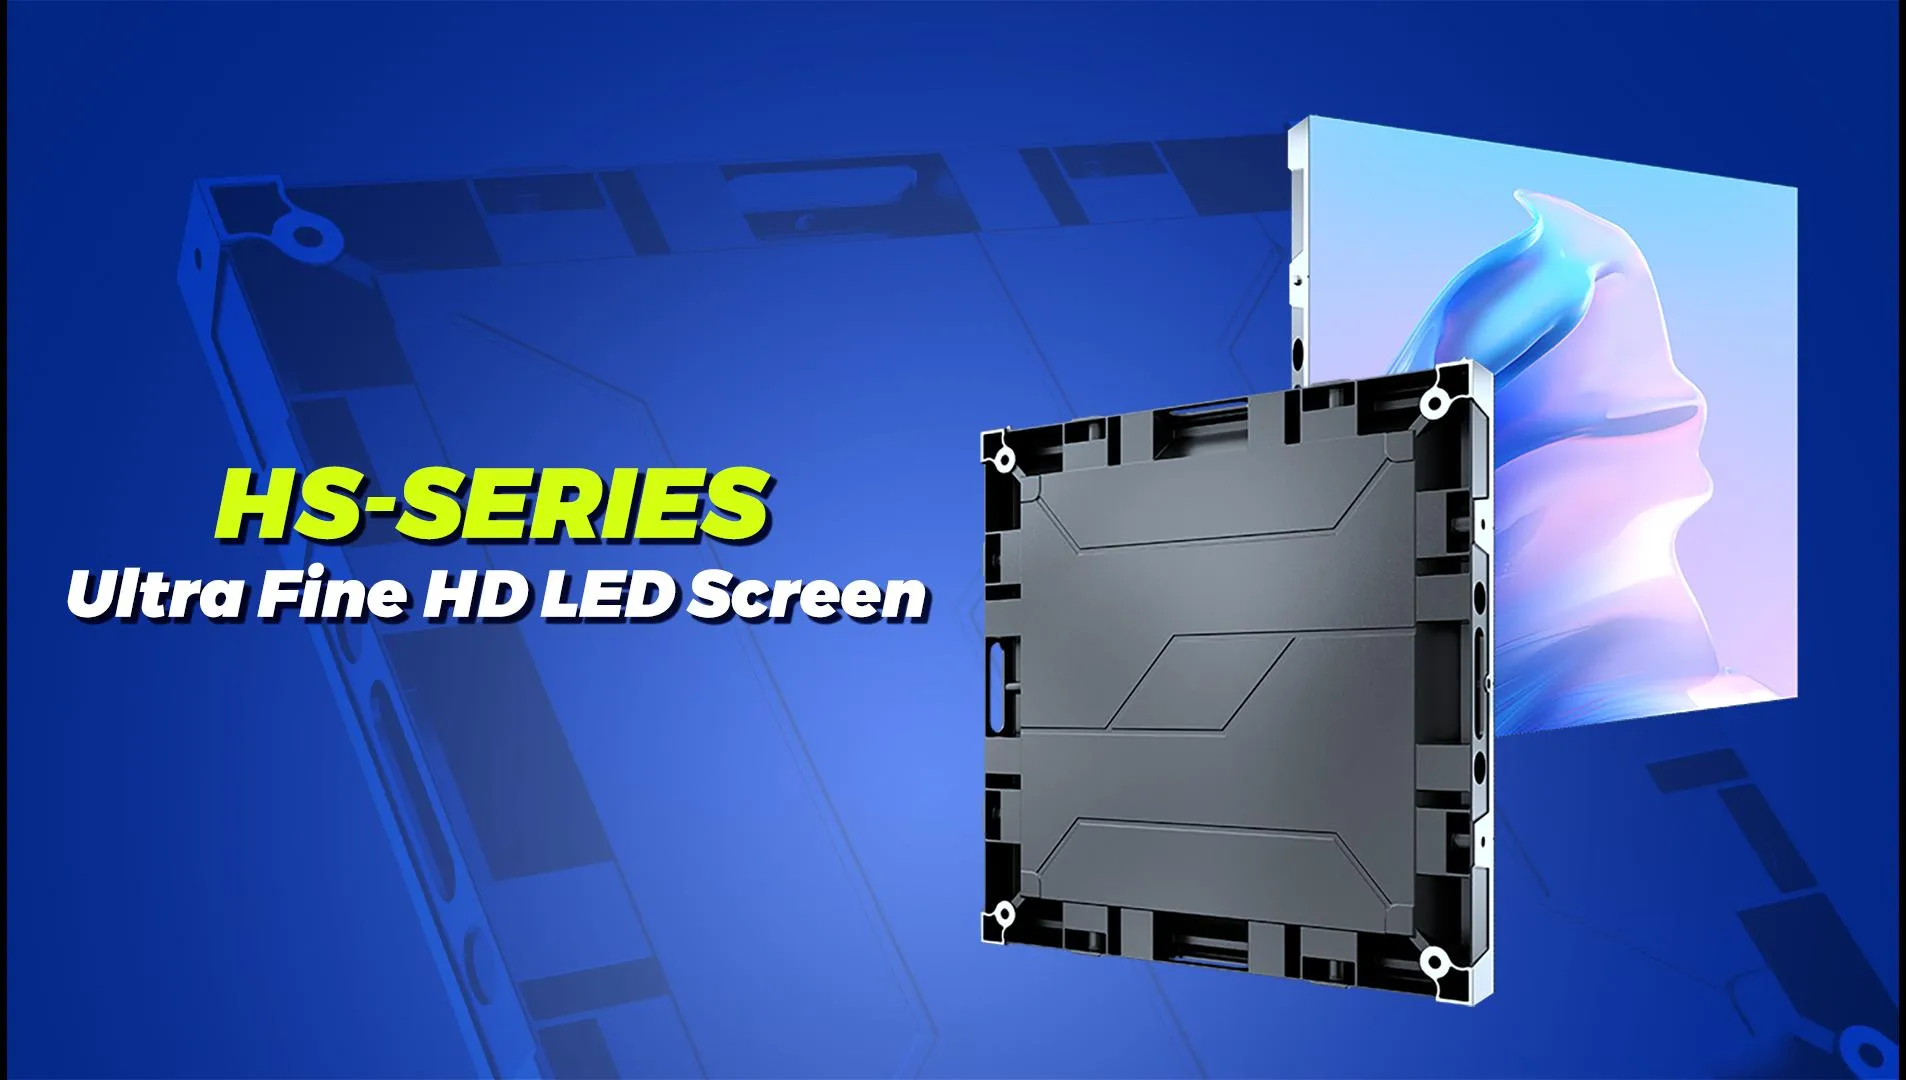 HS series Ultra fine HD LED screen